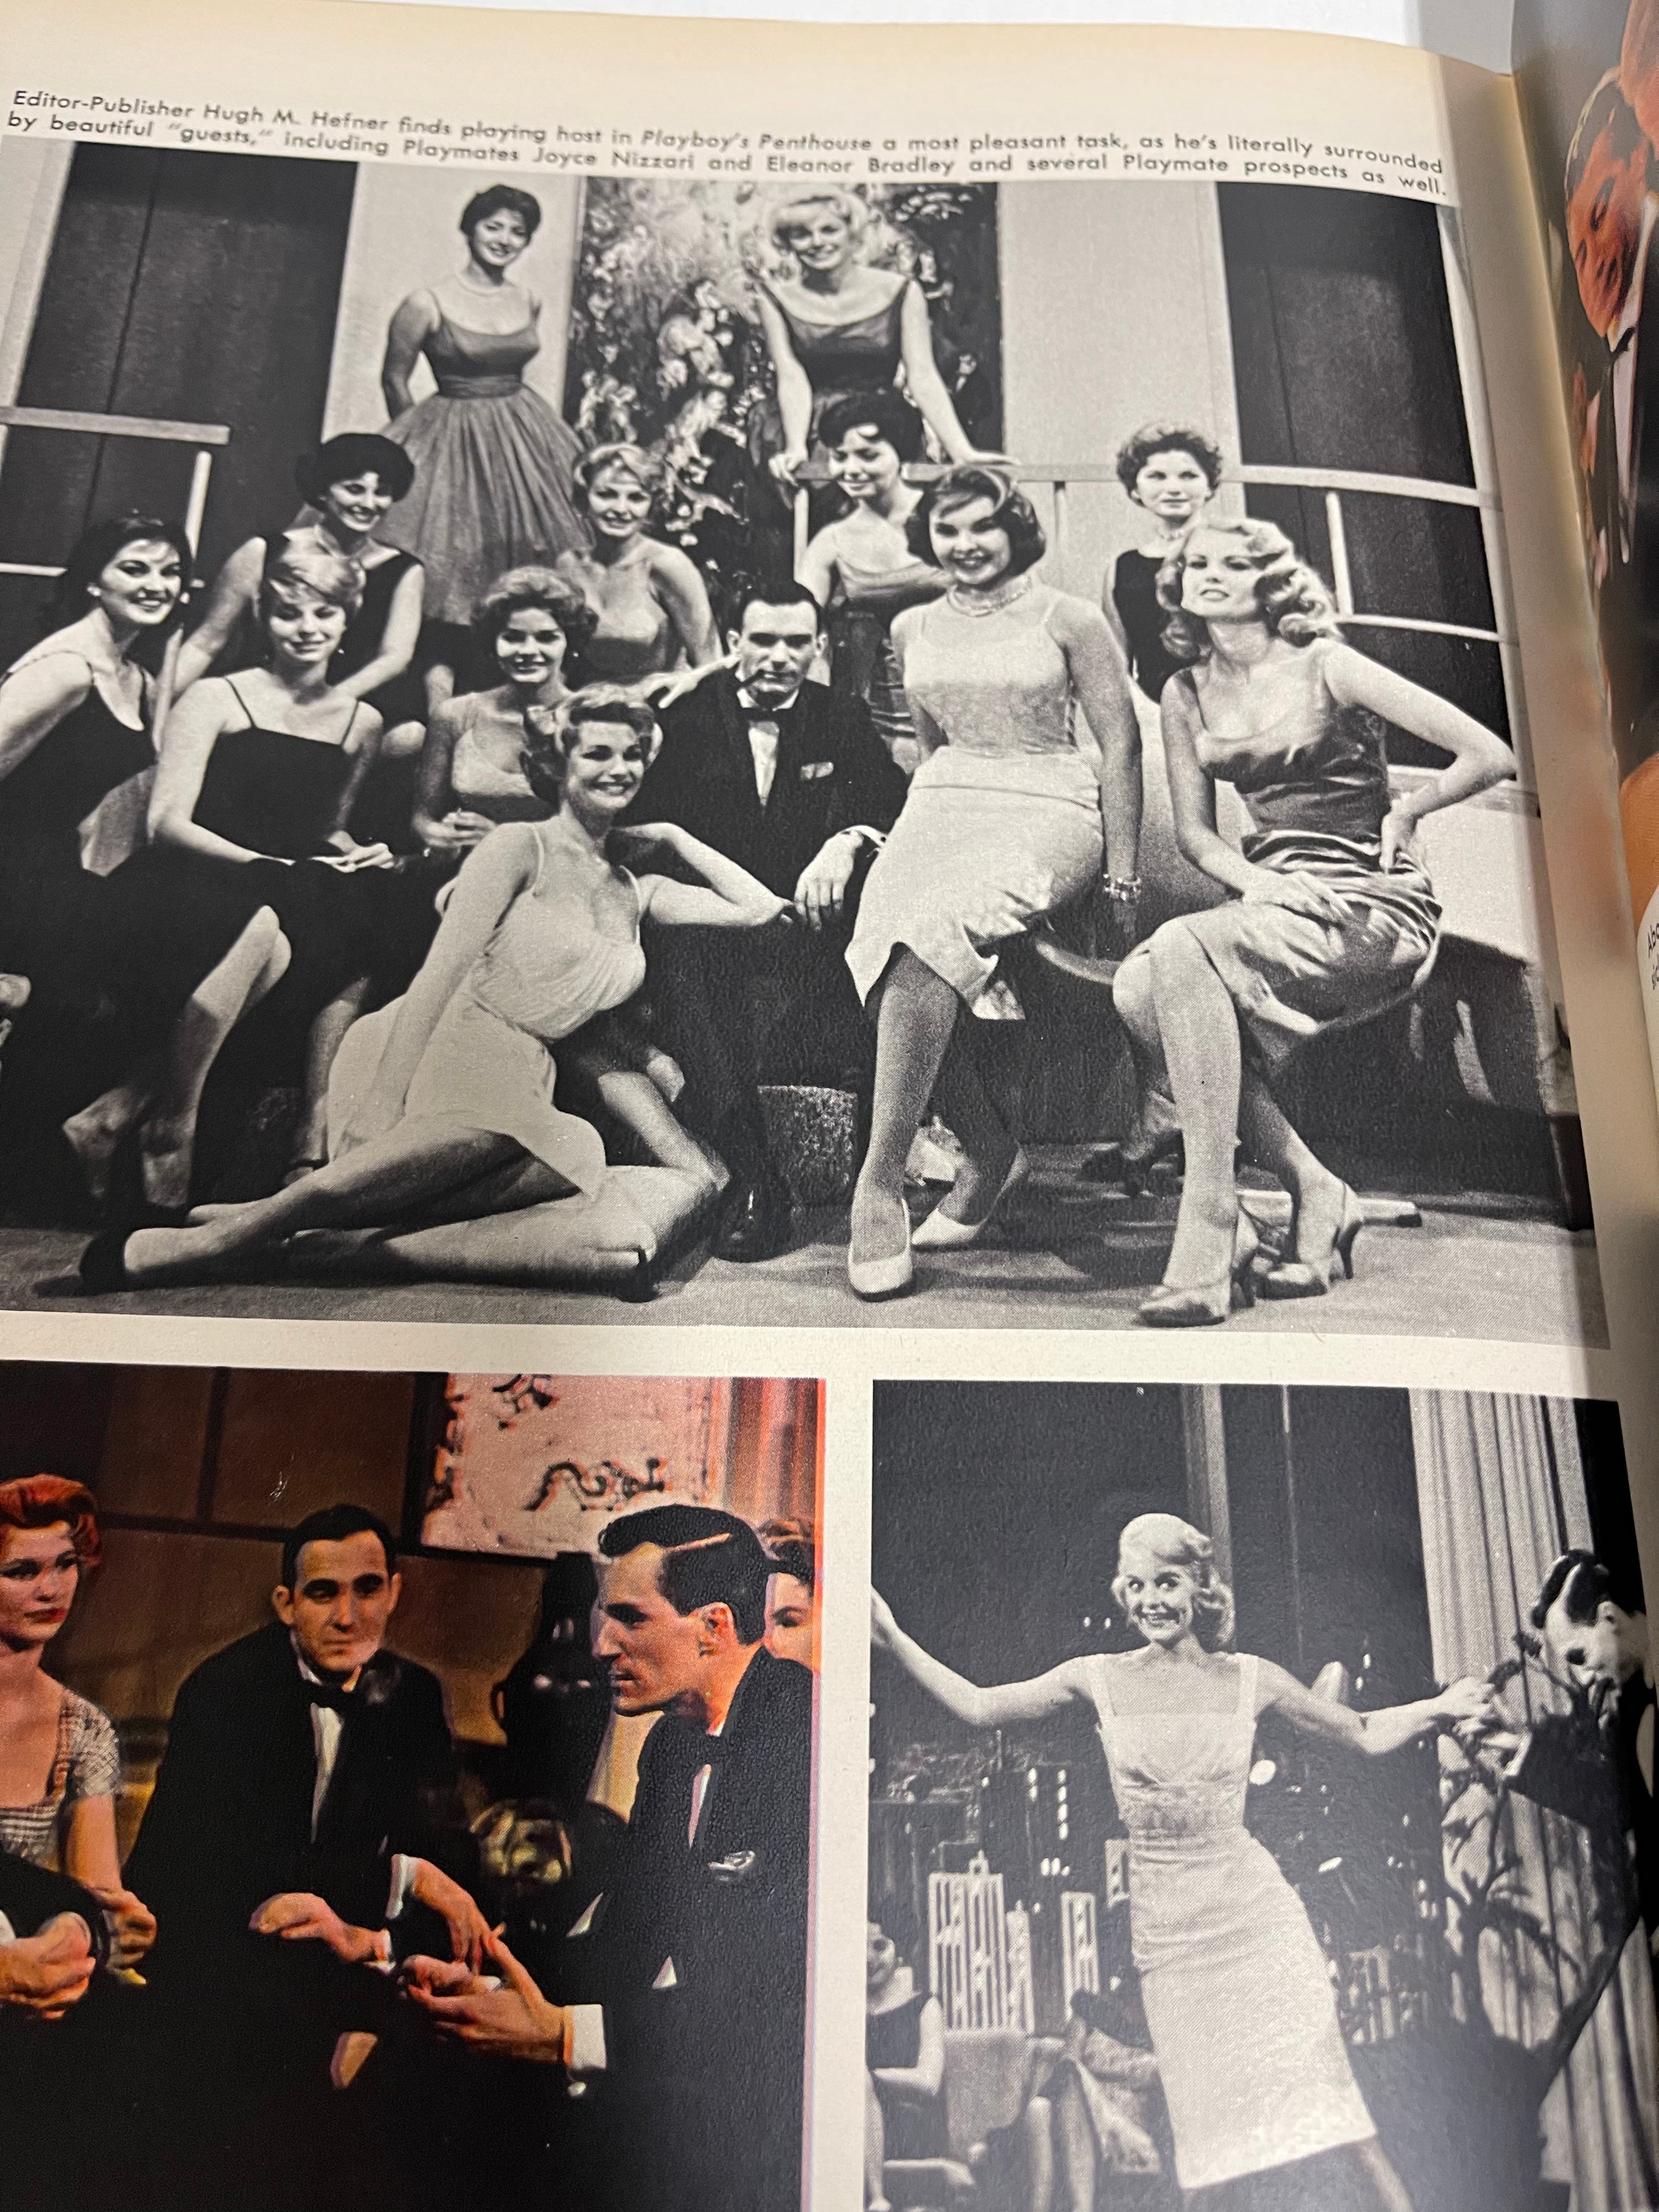 Playboy magazine 1960 Ian Fleming, F1 and Las Vegas